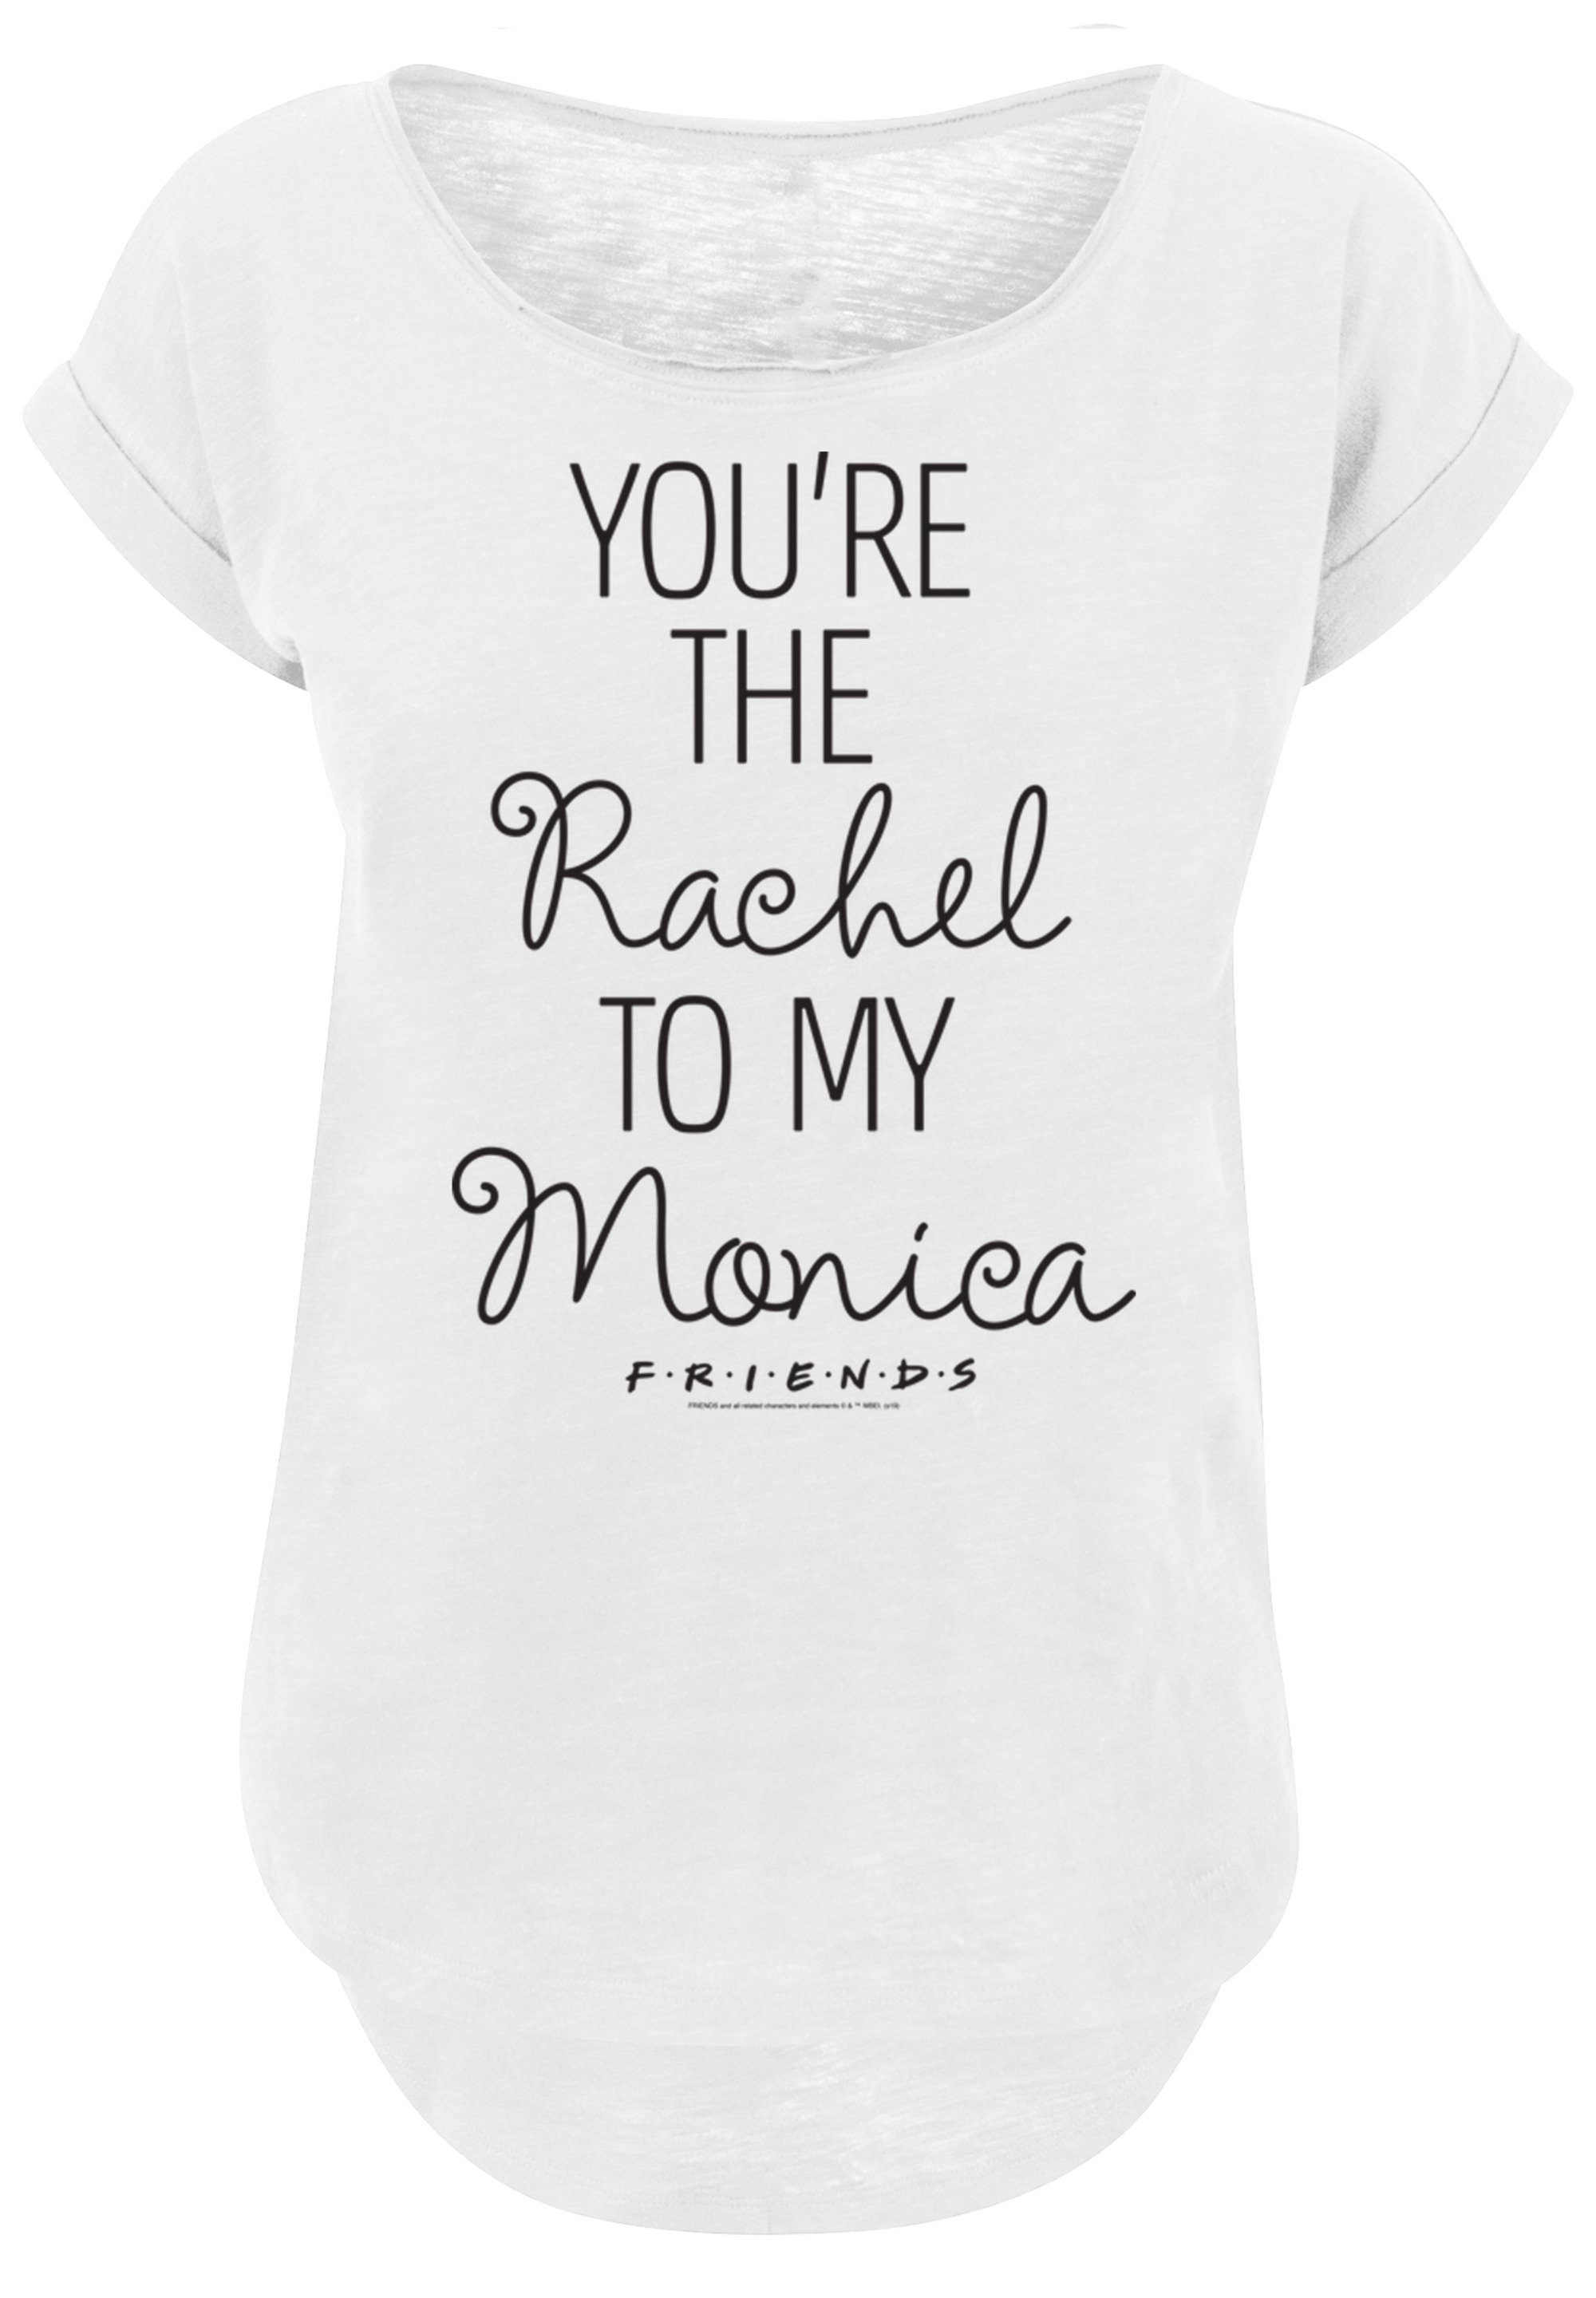 F4NT4STIC Cut The T-Shirt Monica T-Shirt FRIENDS Print Long Youre To Rachel My